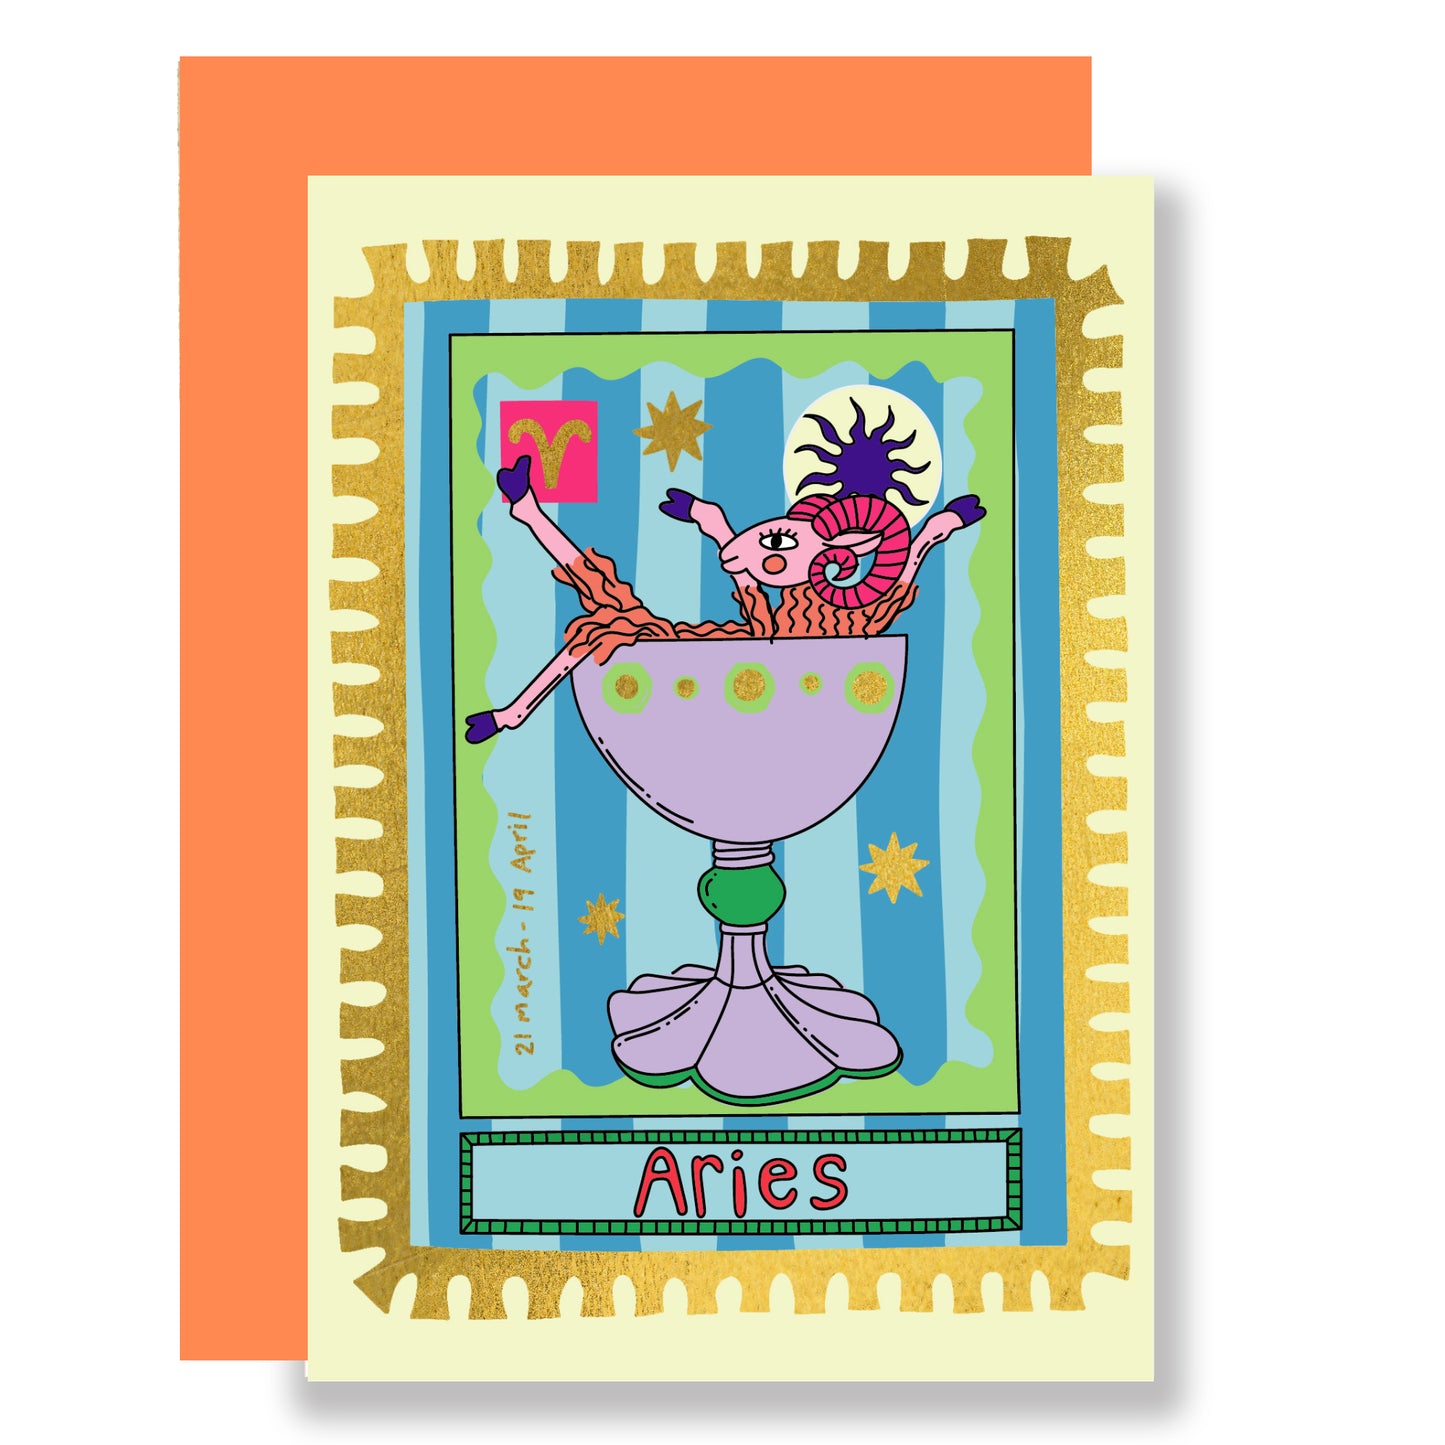 Aries greeting card